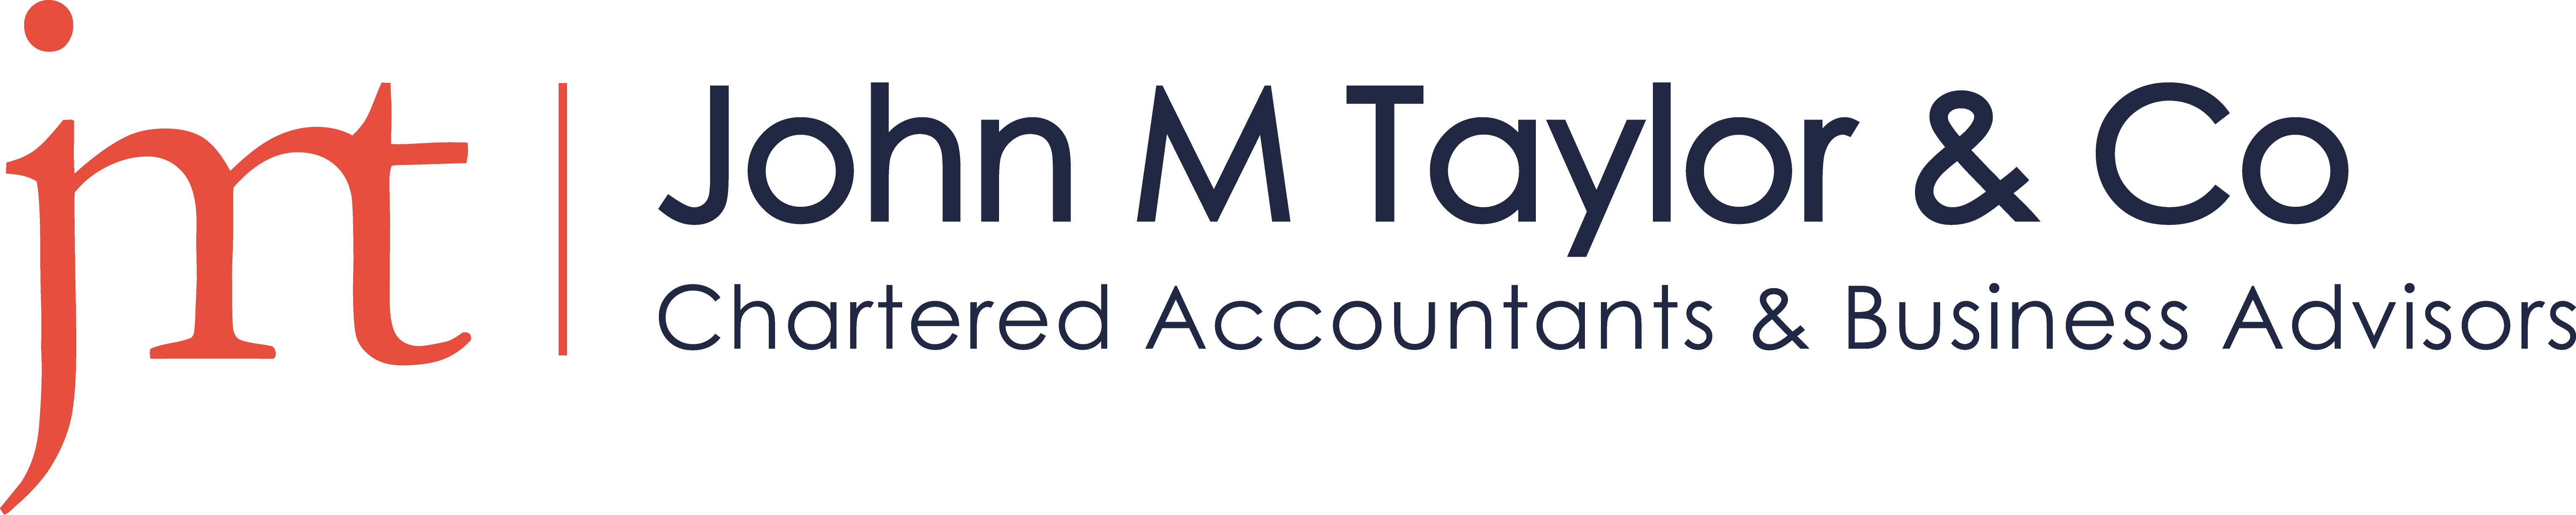 John M Taylor  & Co Chartered Accountants & Business Advisors